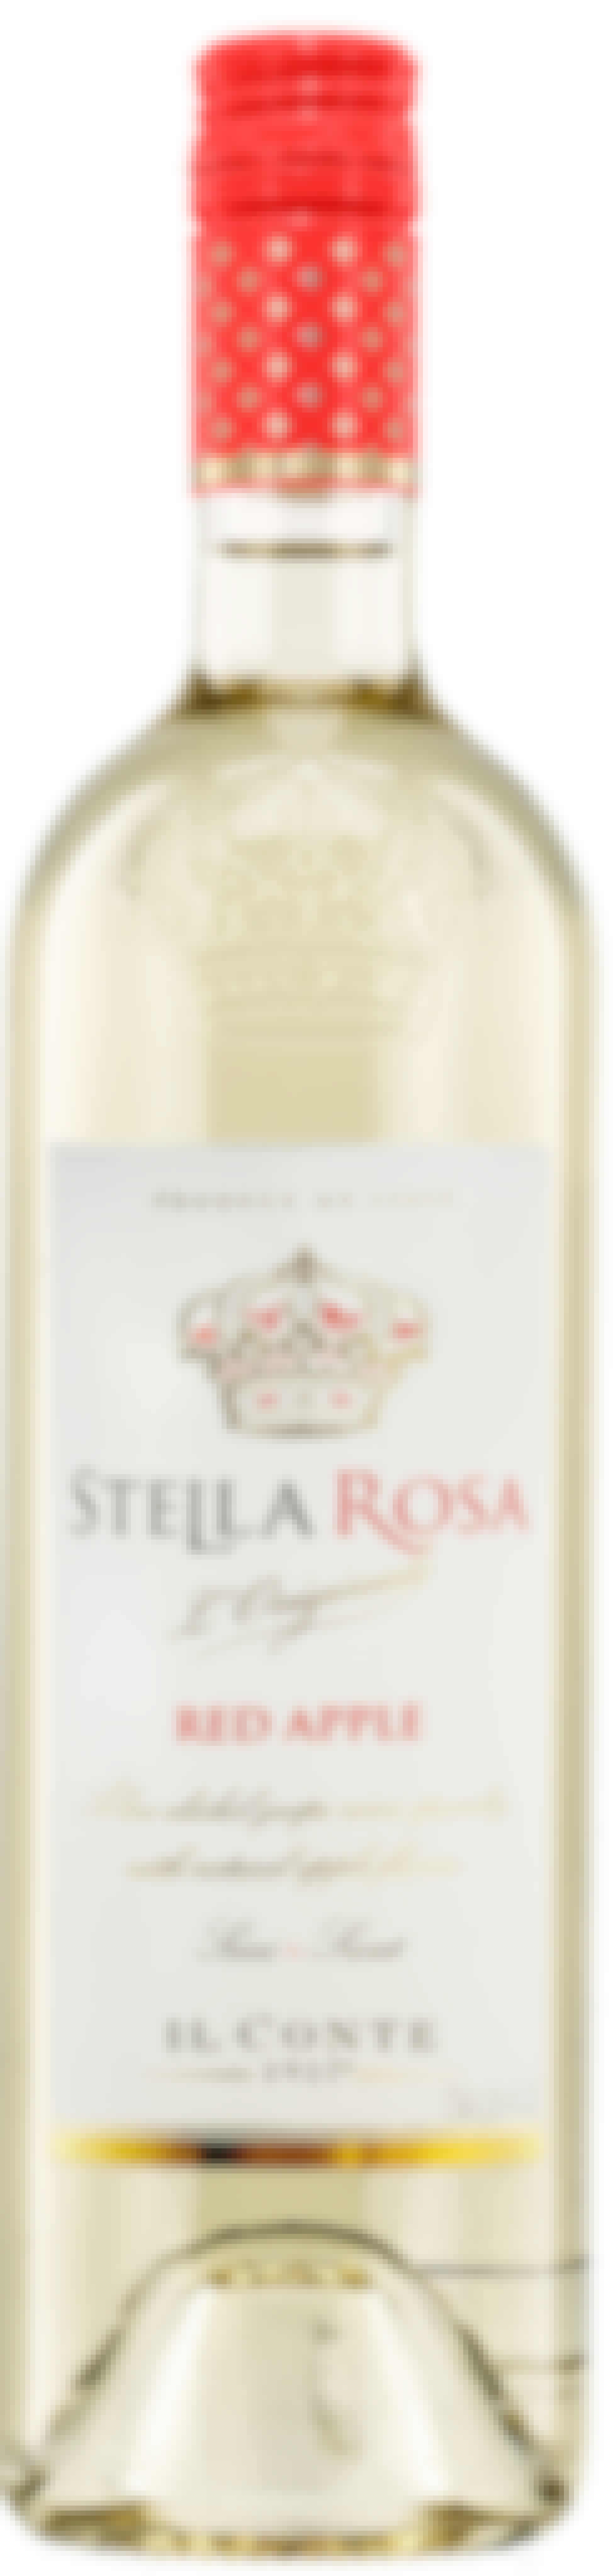 Stella Rosa Stella Red Apple 750ml